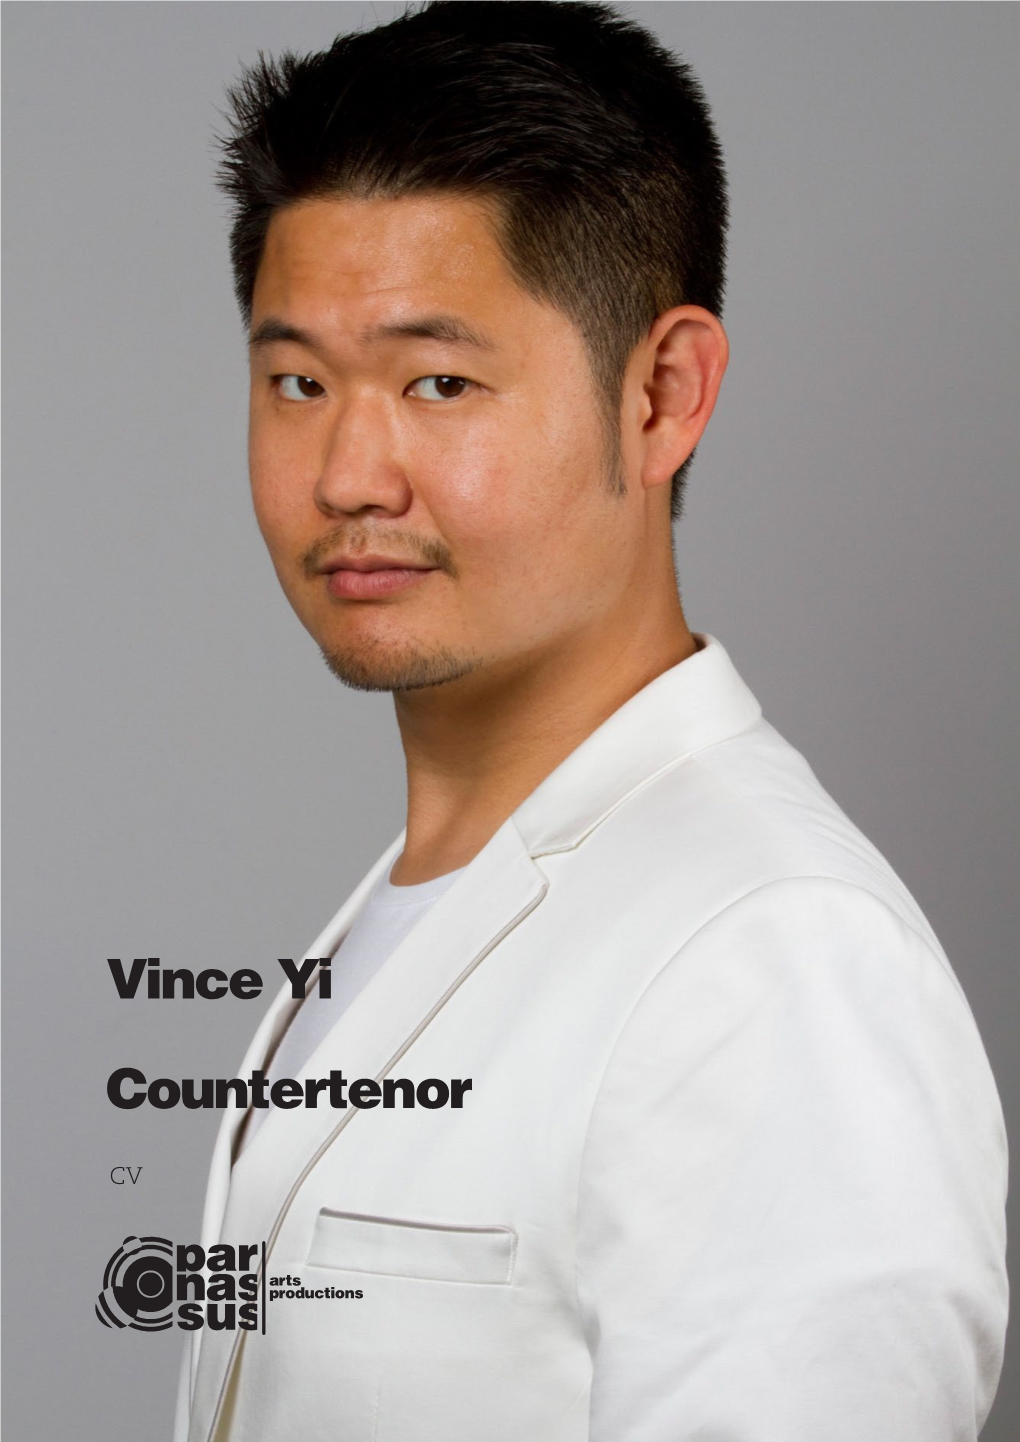 Vince Yi Countertenor